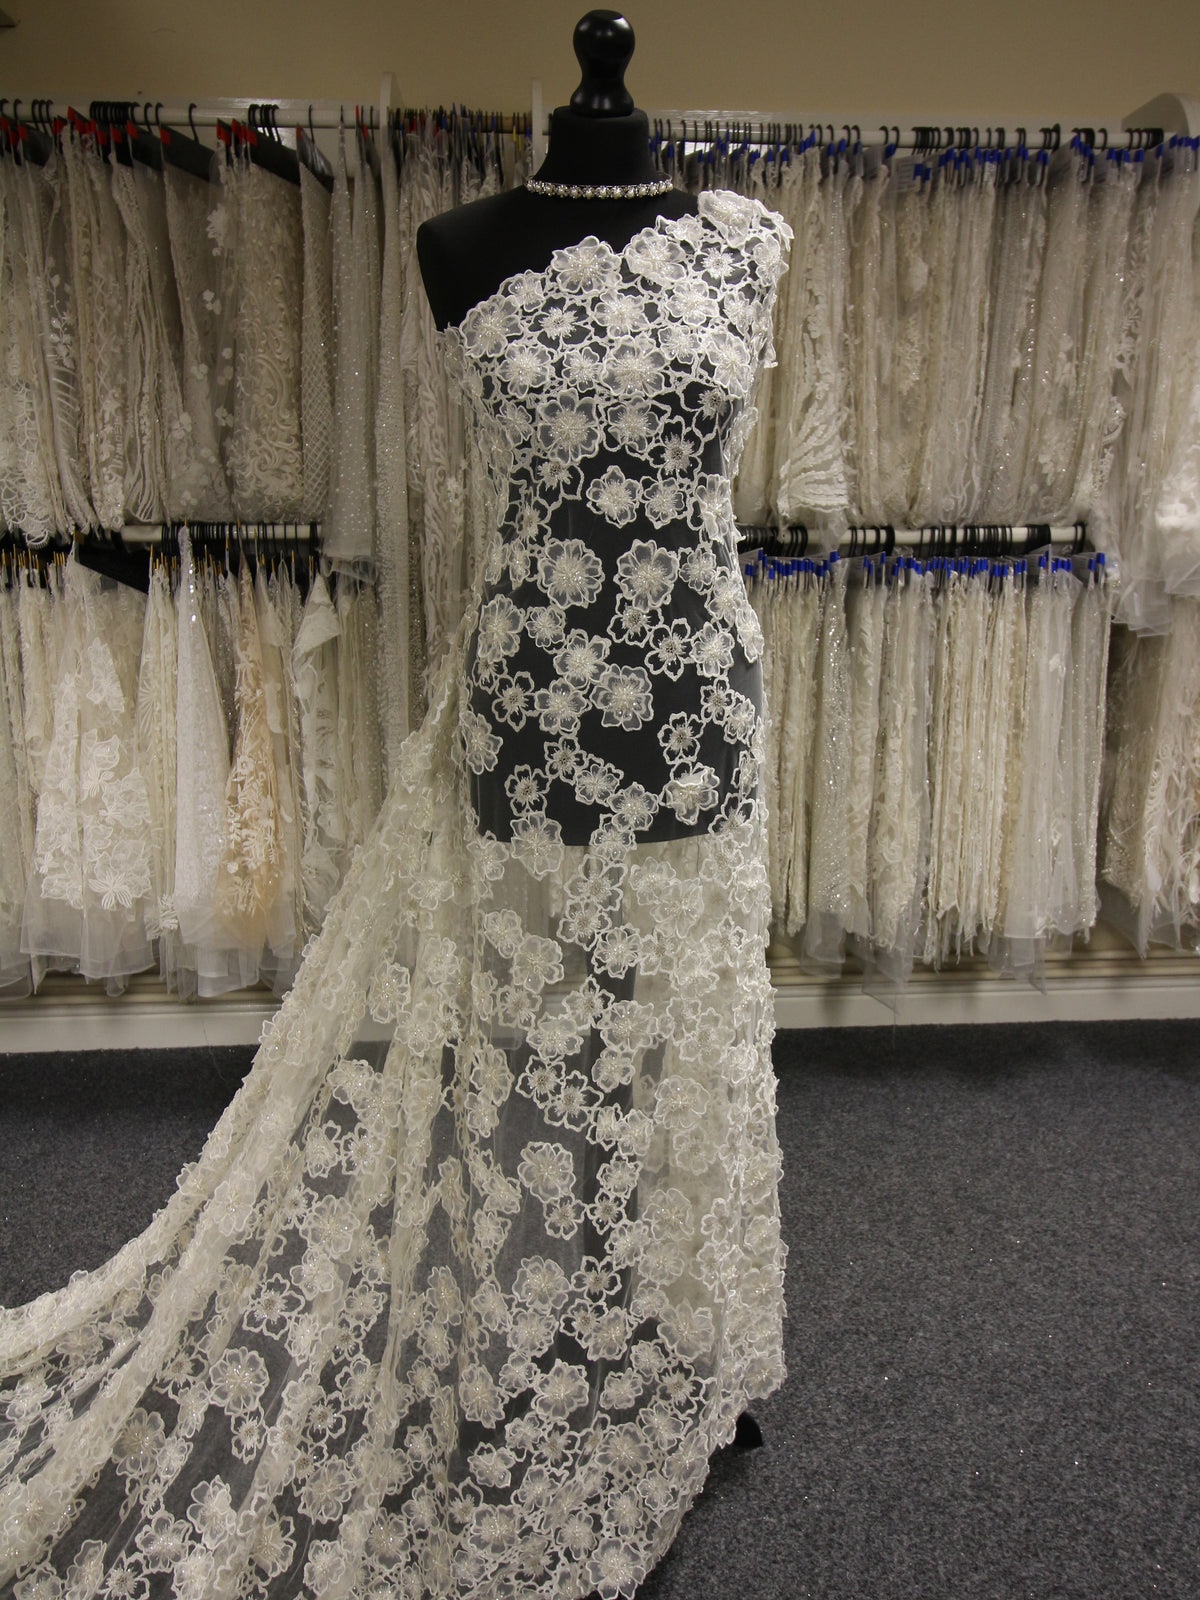 3D Lace : Dress Making - Bridal Fabrics